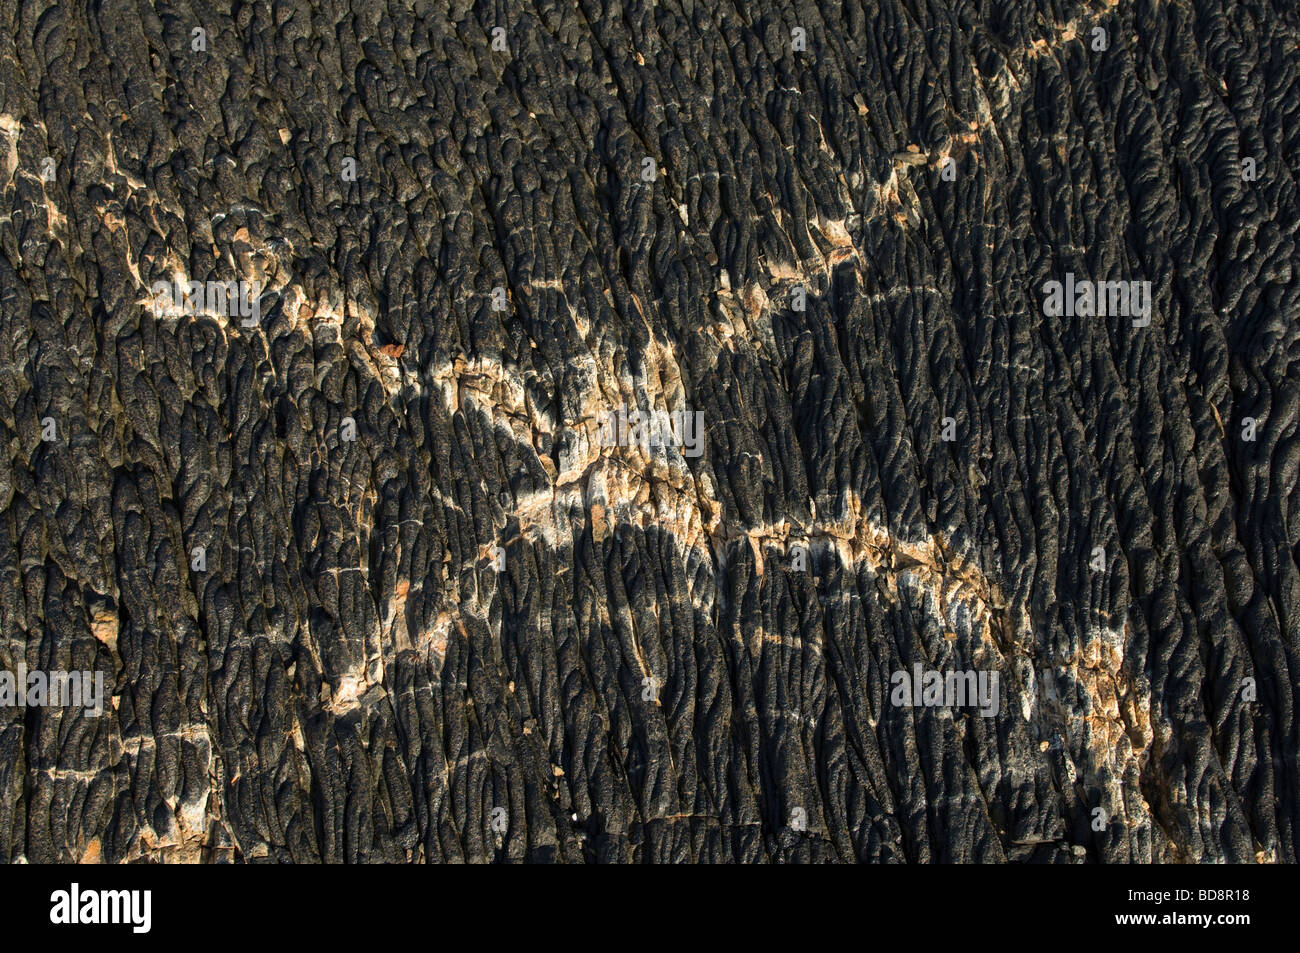 Hot Pahoehoe Lava Creates Ribbon-Like Shapes as it cools Sullivan Bay Santiago Island Galapagos Ecuador Pacific Ocean Stock Photo